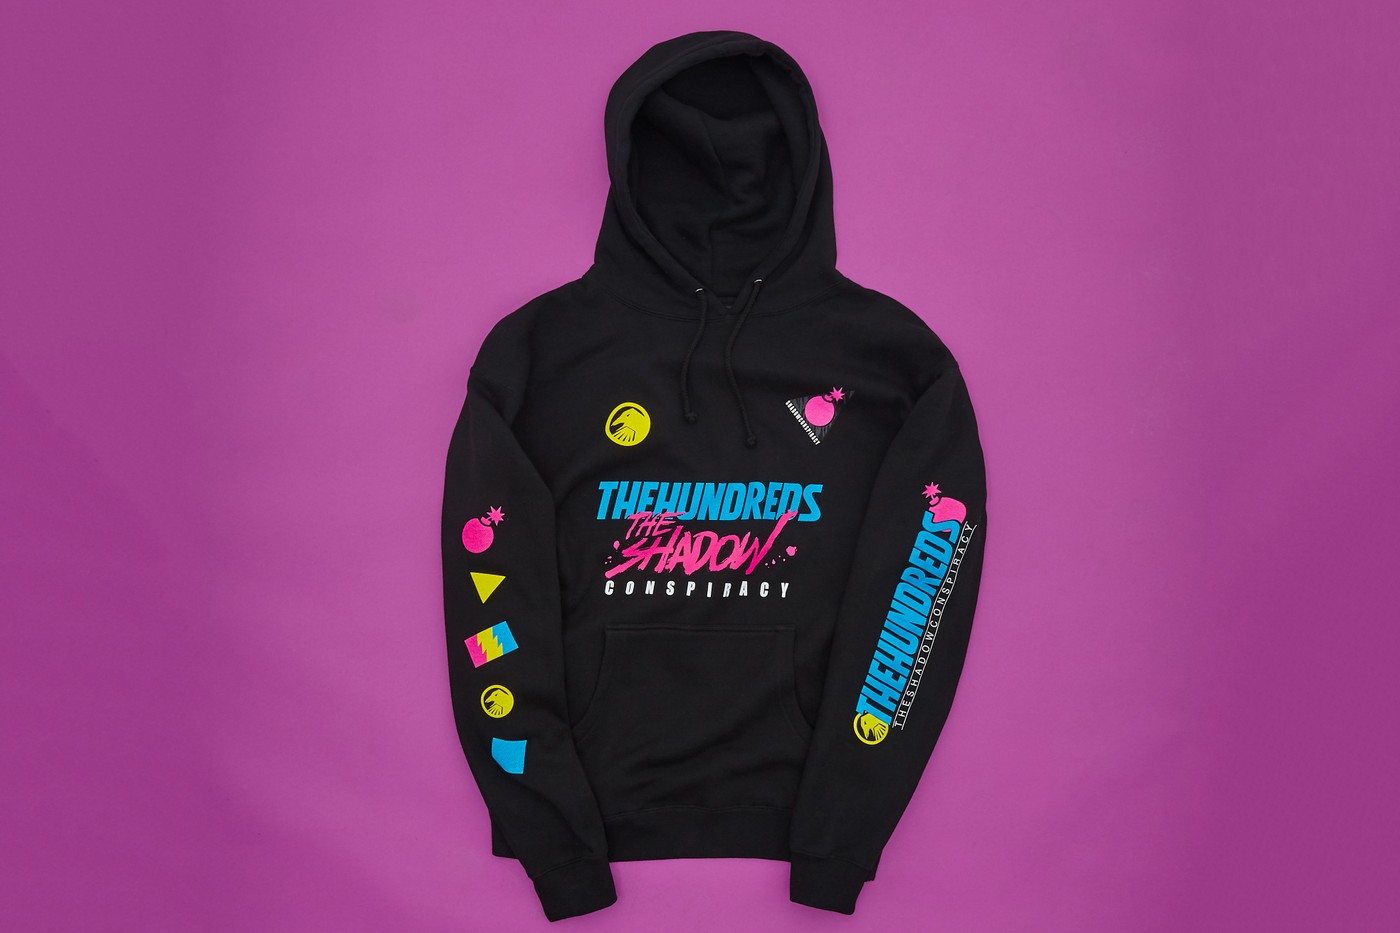 the hundreds bmx hoodie